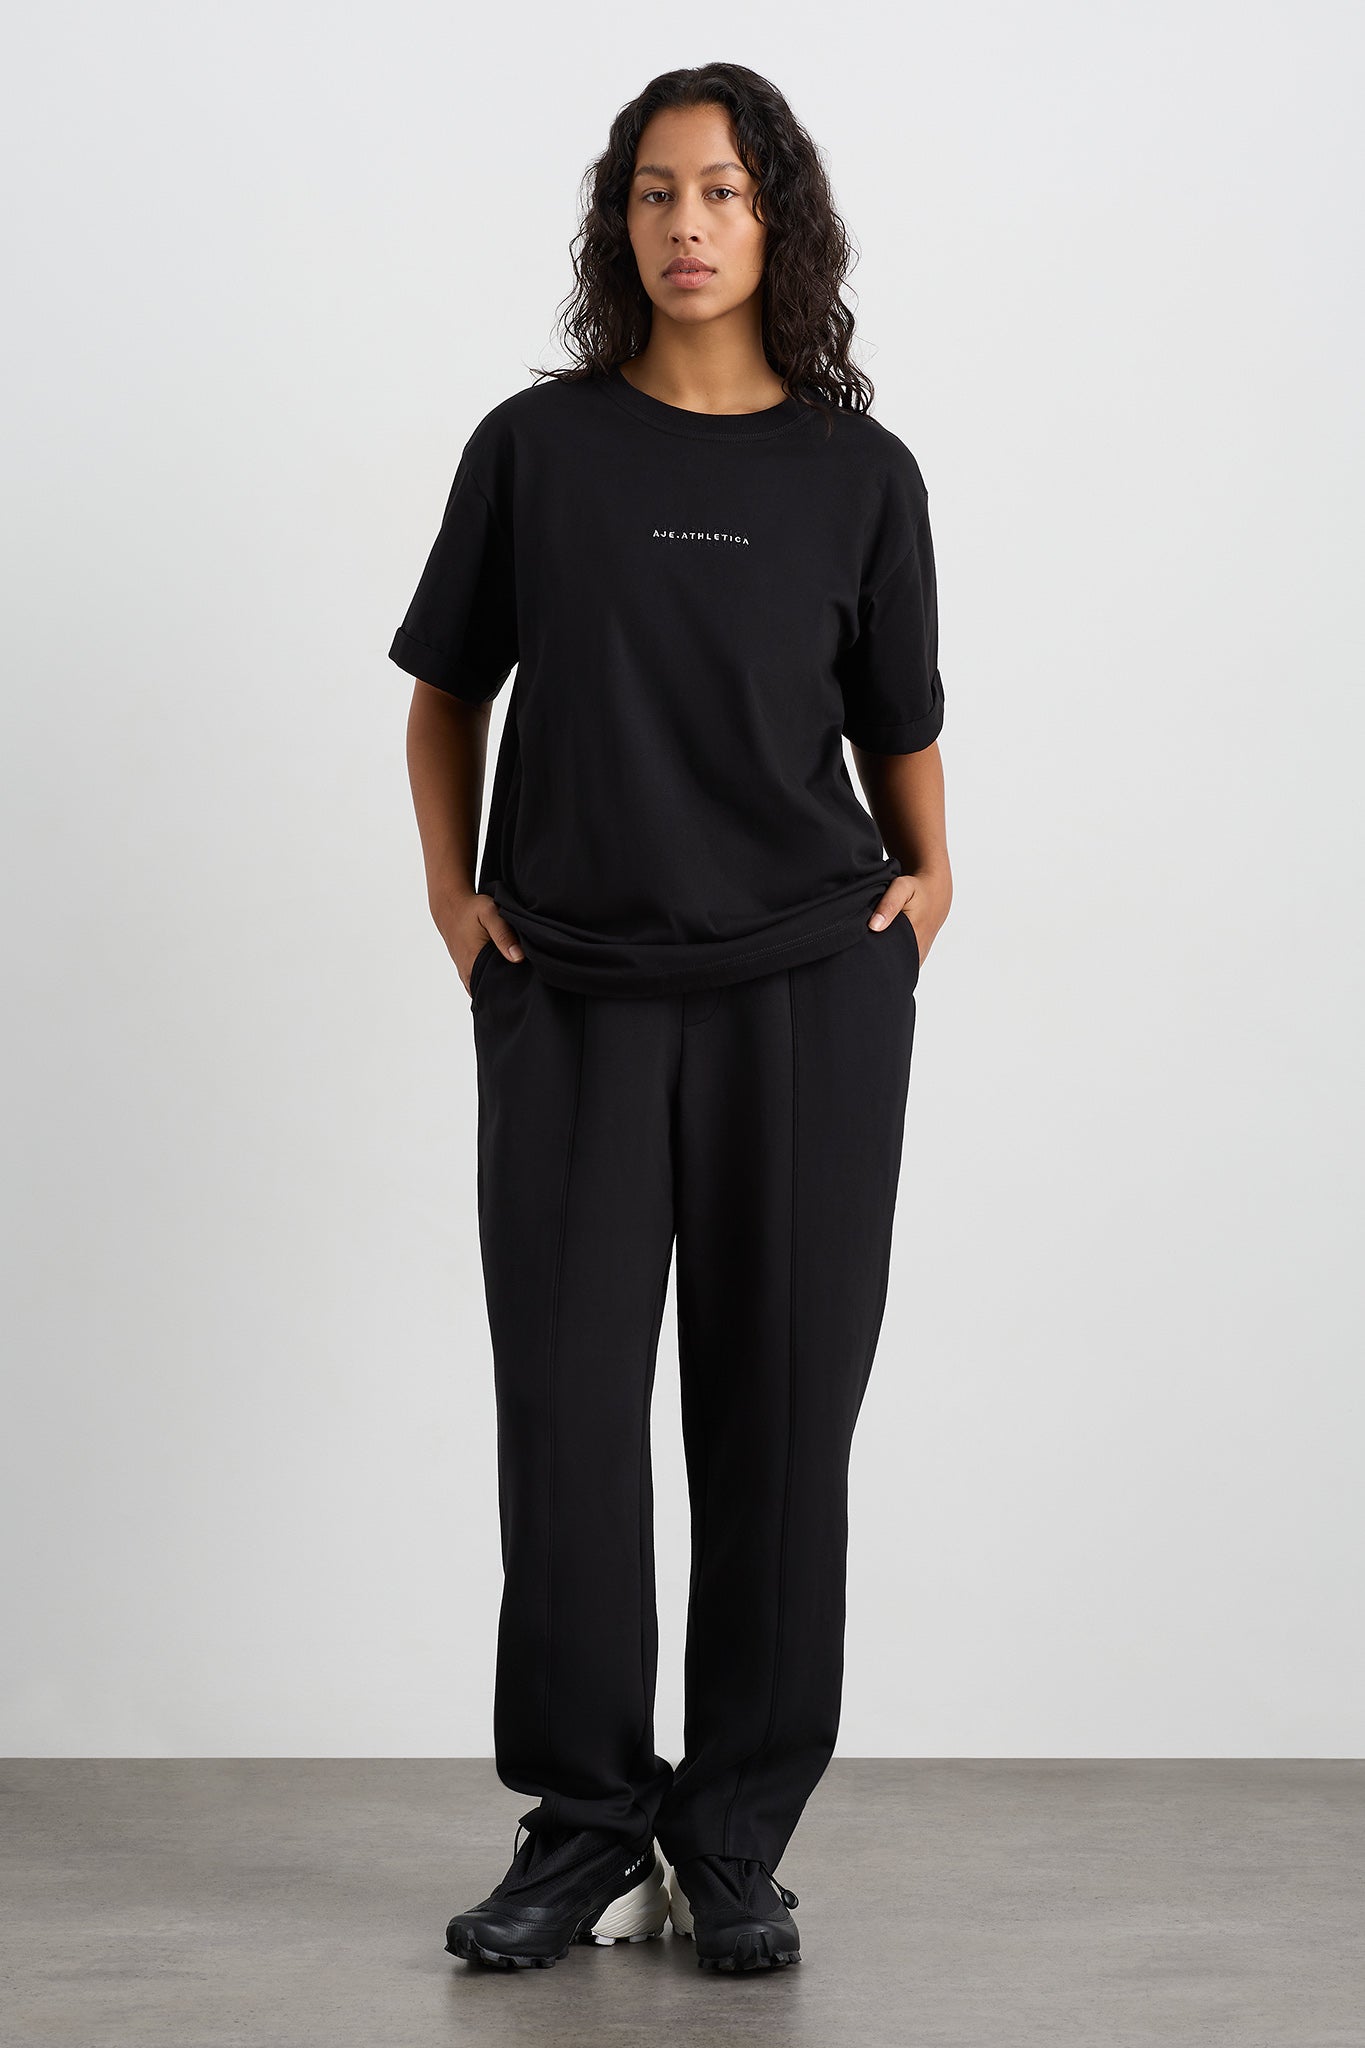 Black Track Pants, Black Track Pants Online, Buy Women's Black Track Pants  Australia